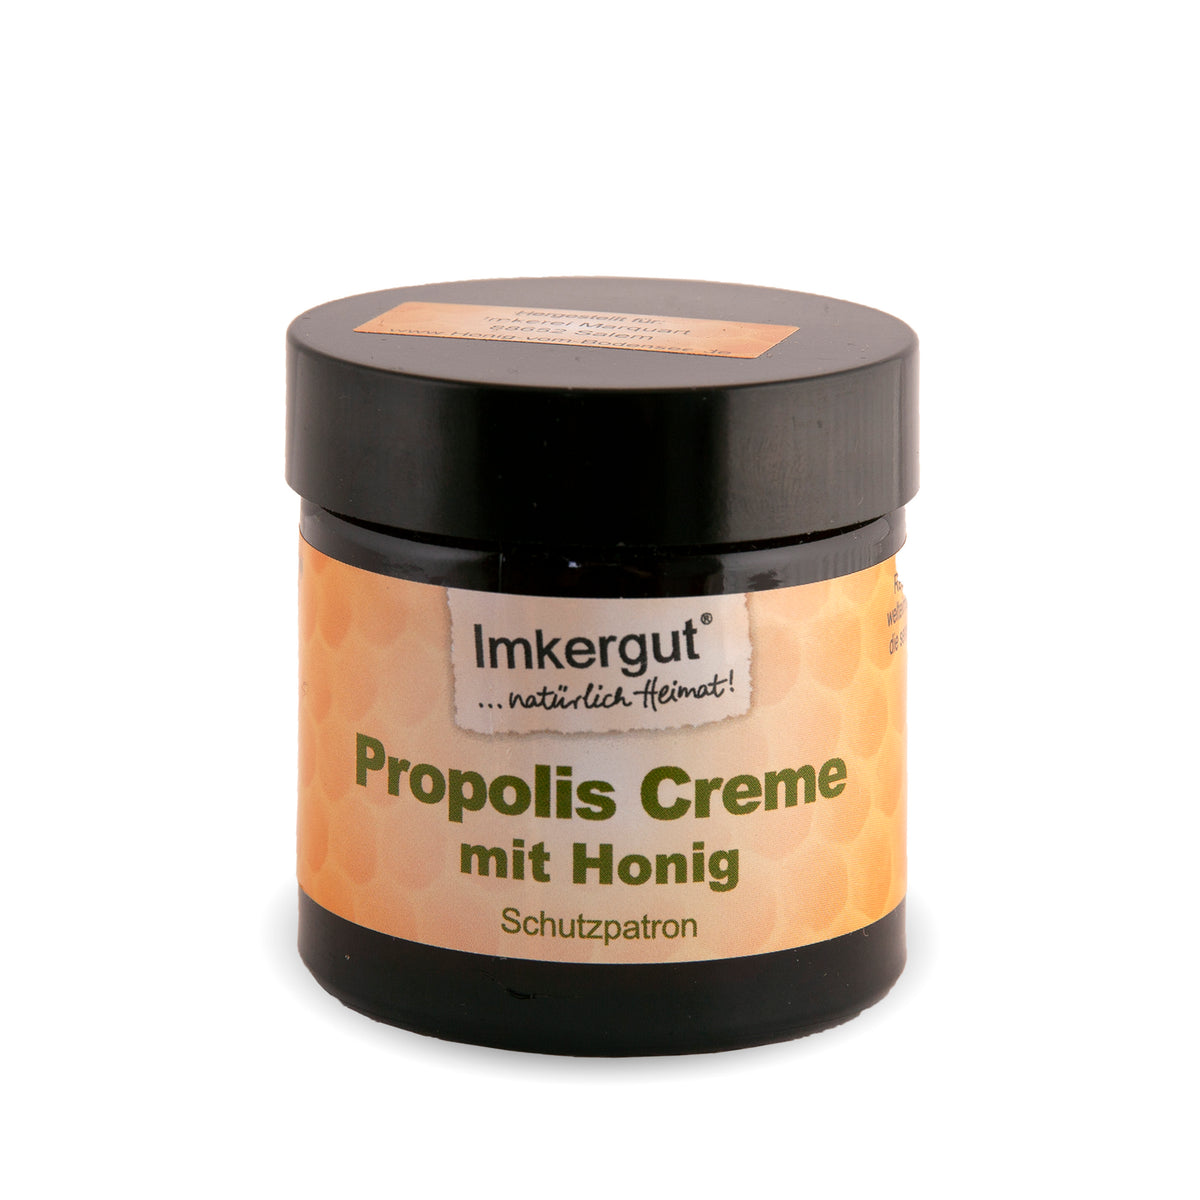 Propolis Creme mit Honig